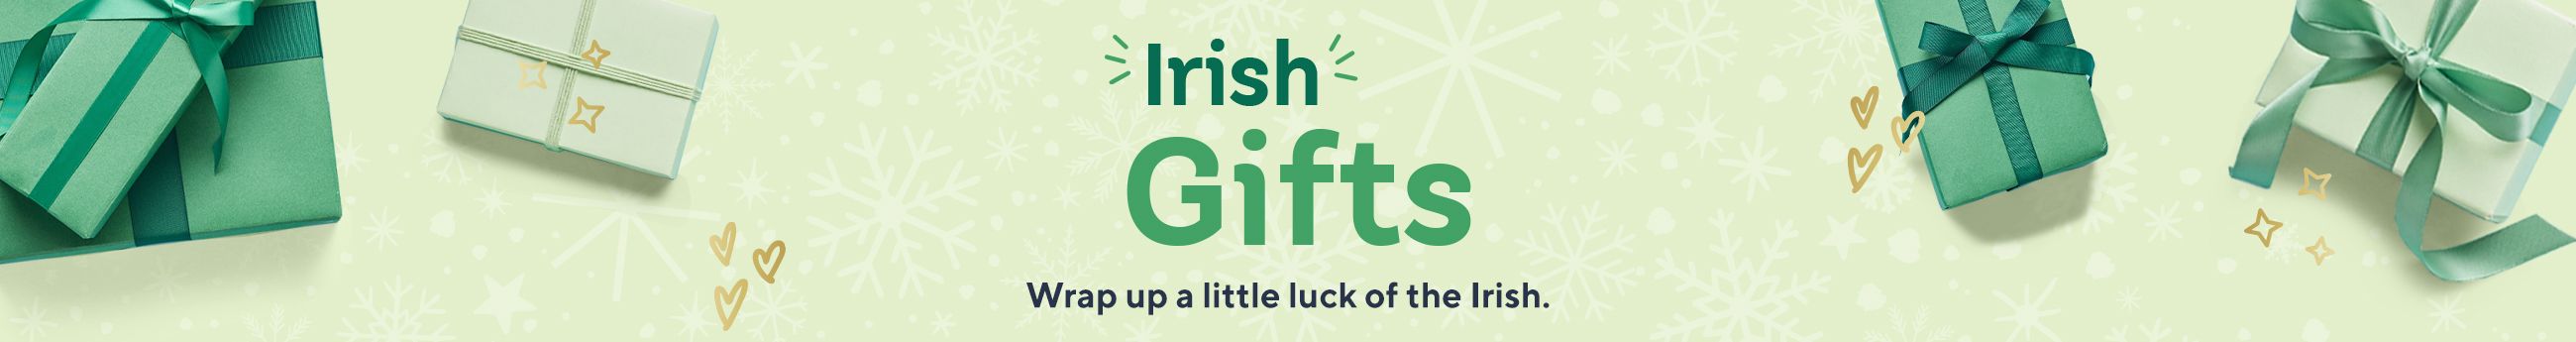 Irish Gifts. Wrap up a little luck of the Irish. 